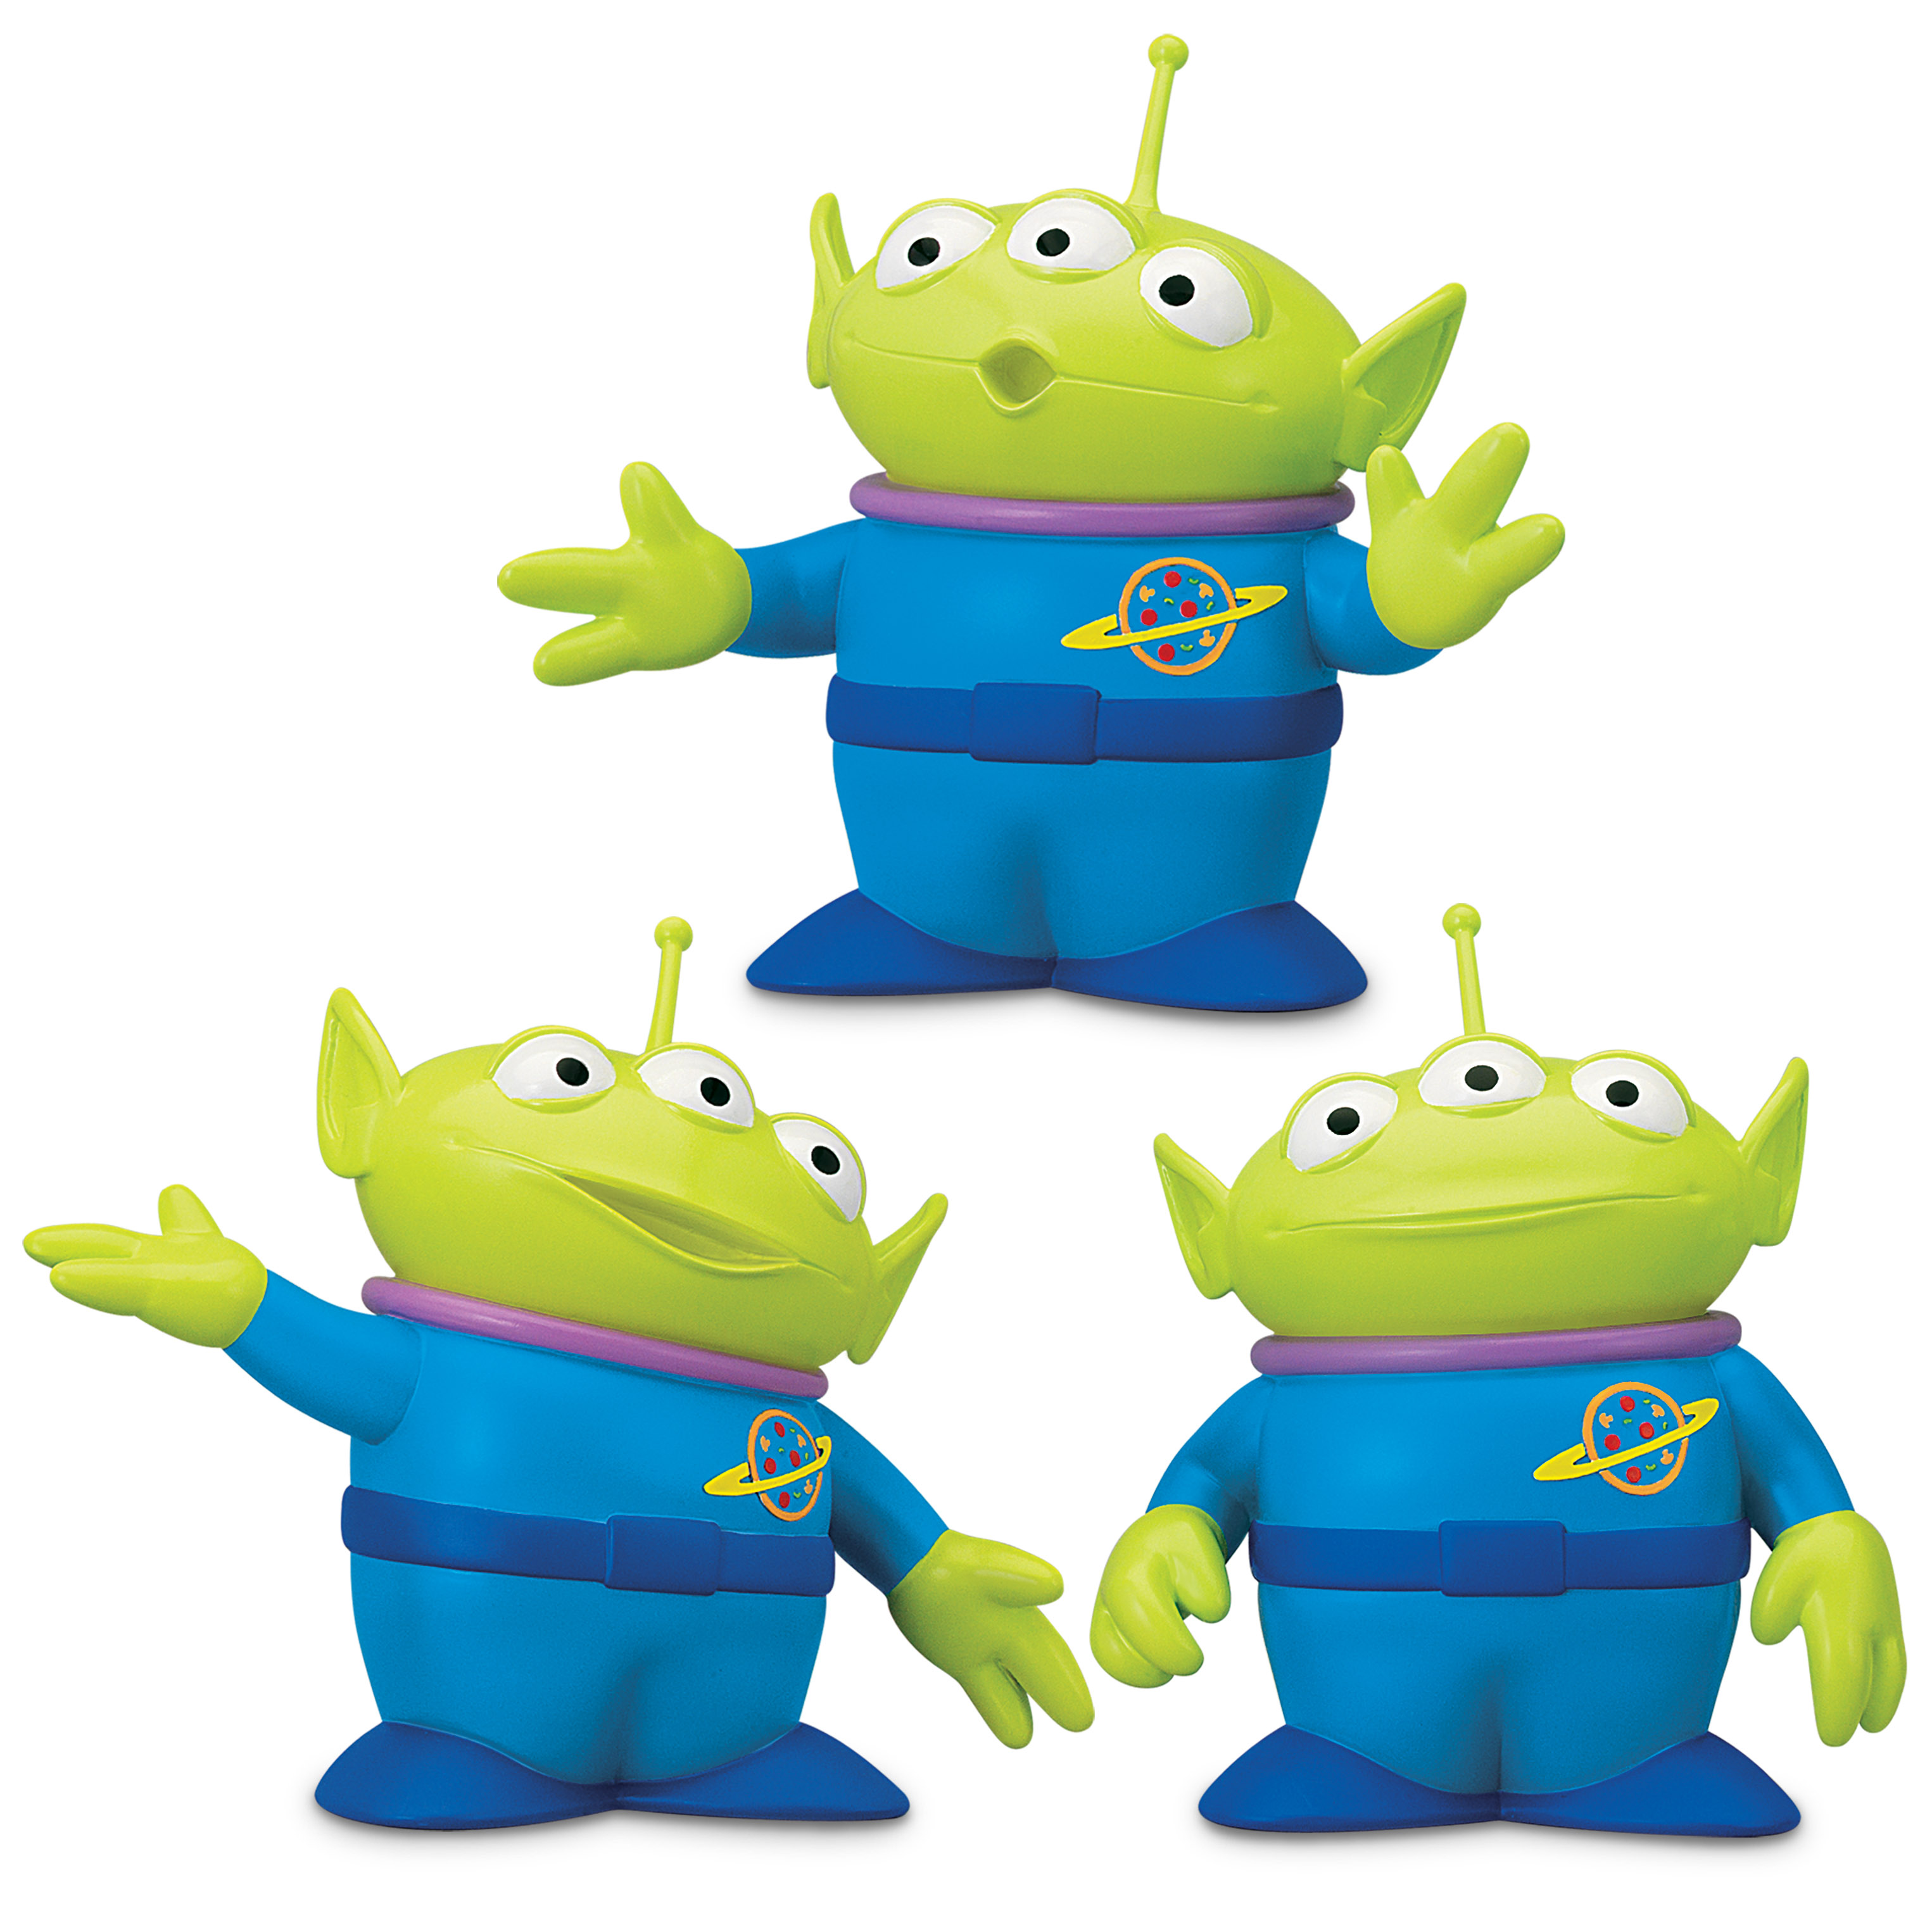 Disney Pixar Toy Story Space Alien Assortment.